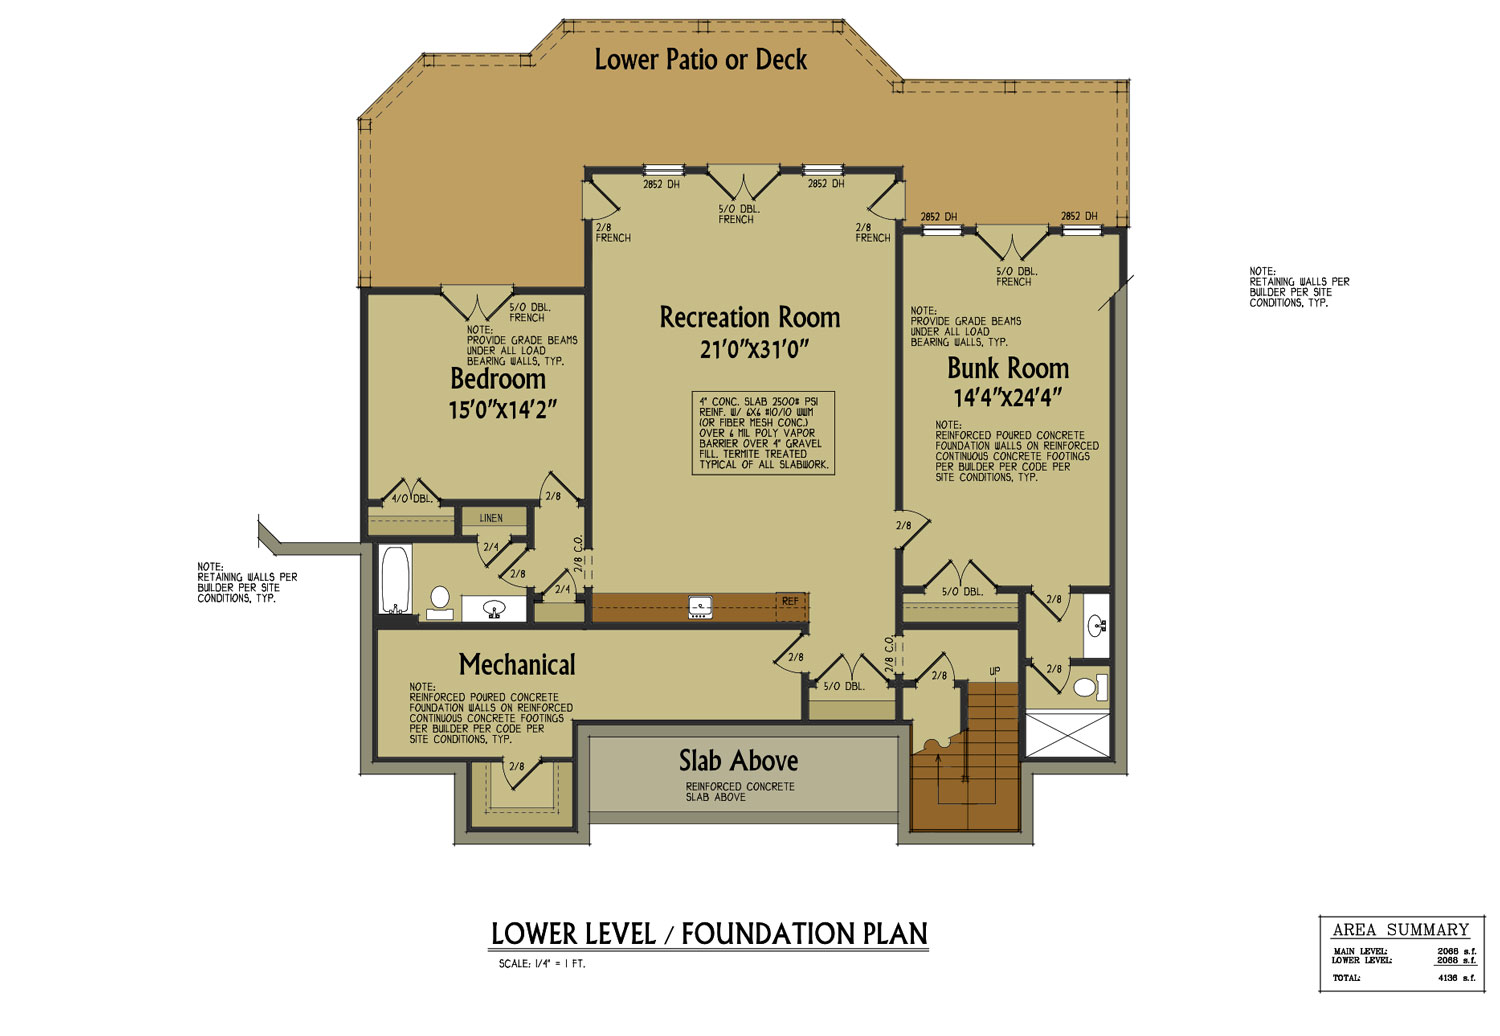 walkout-basement-floor-plan-bunk-room-appalachia-mountain-double